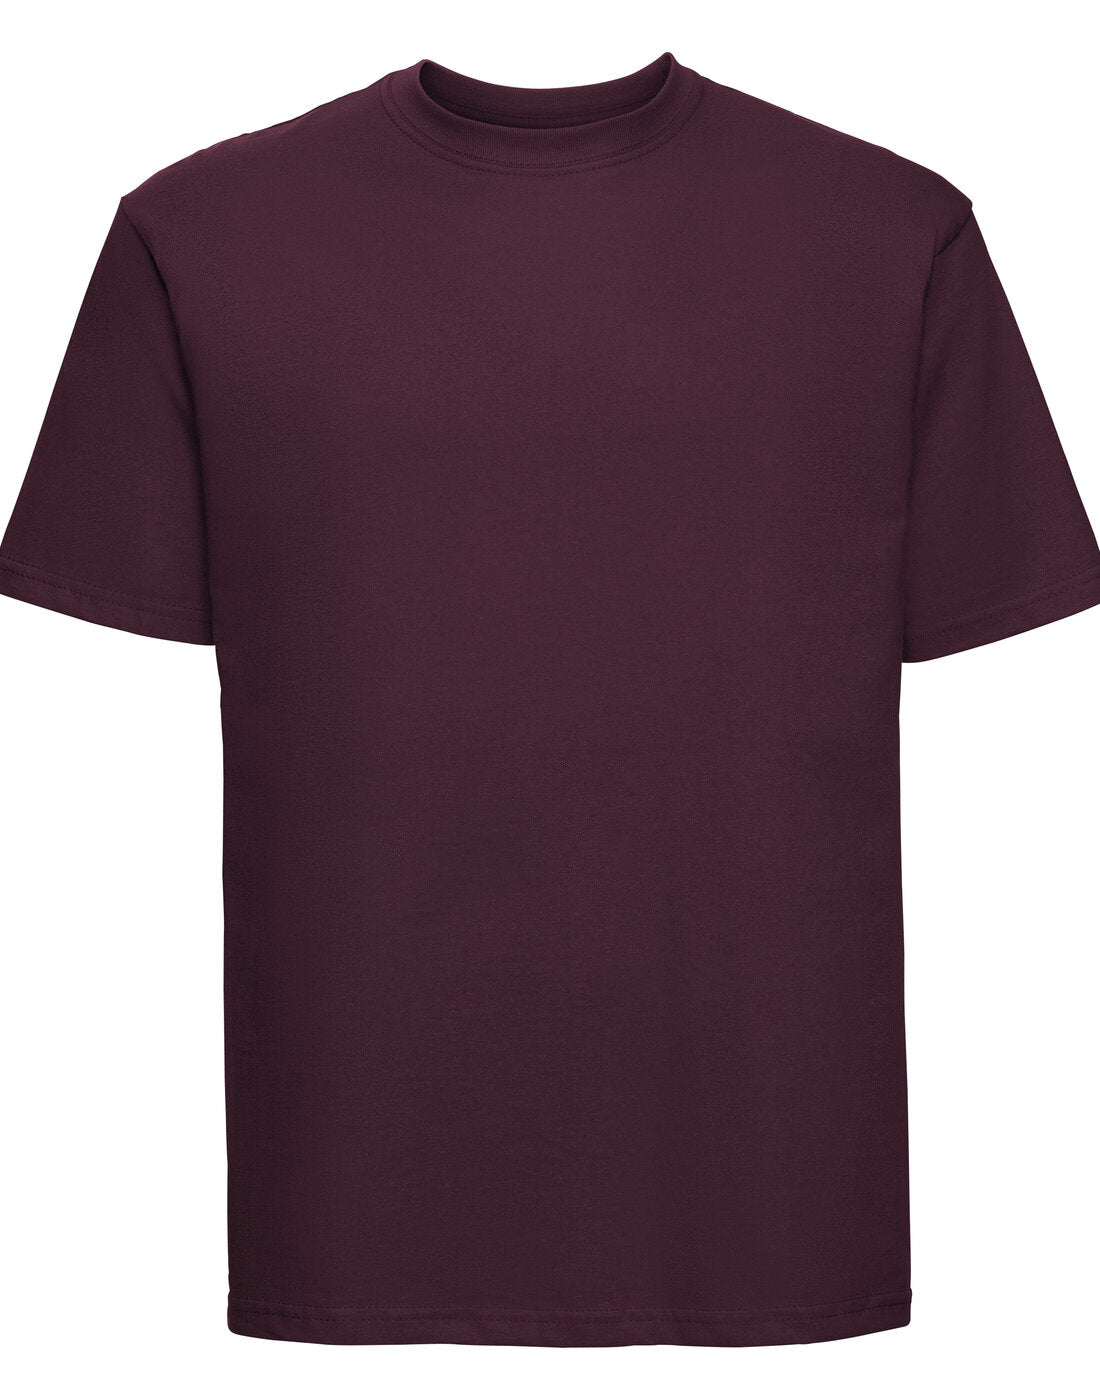 Russell Classic Unisex T-Shirt - Burgundy